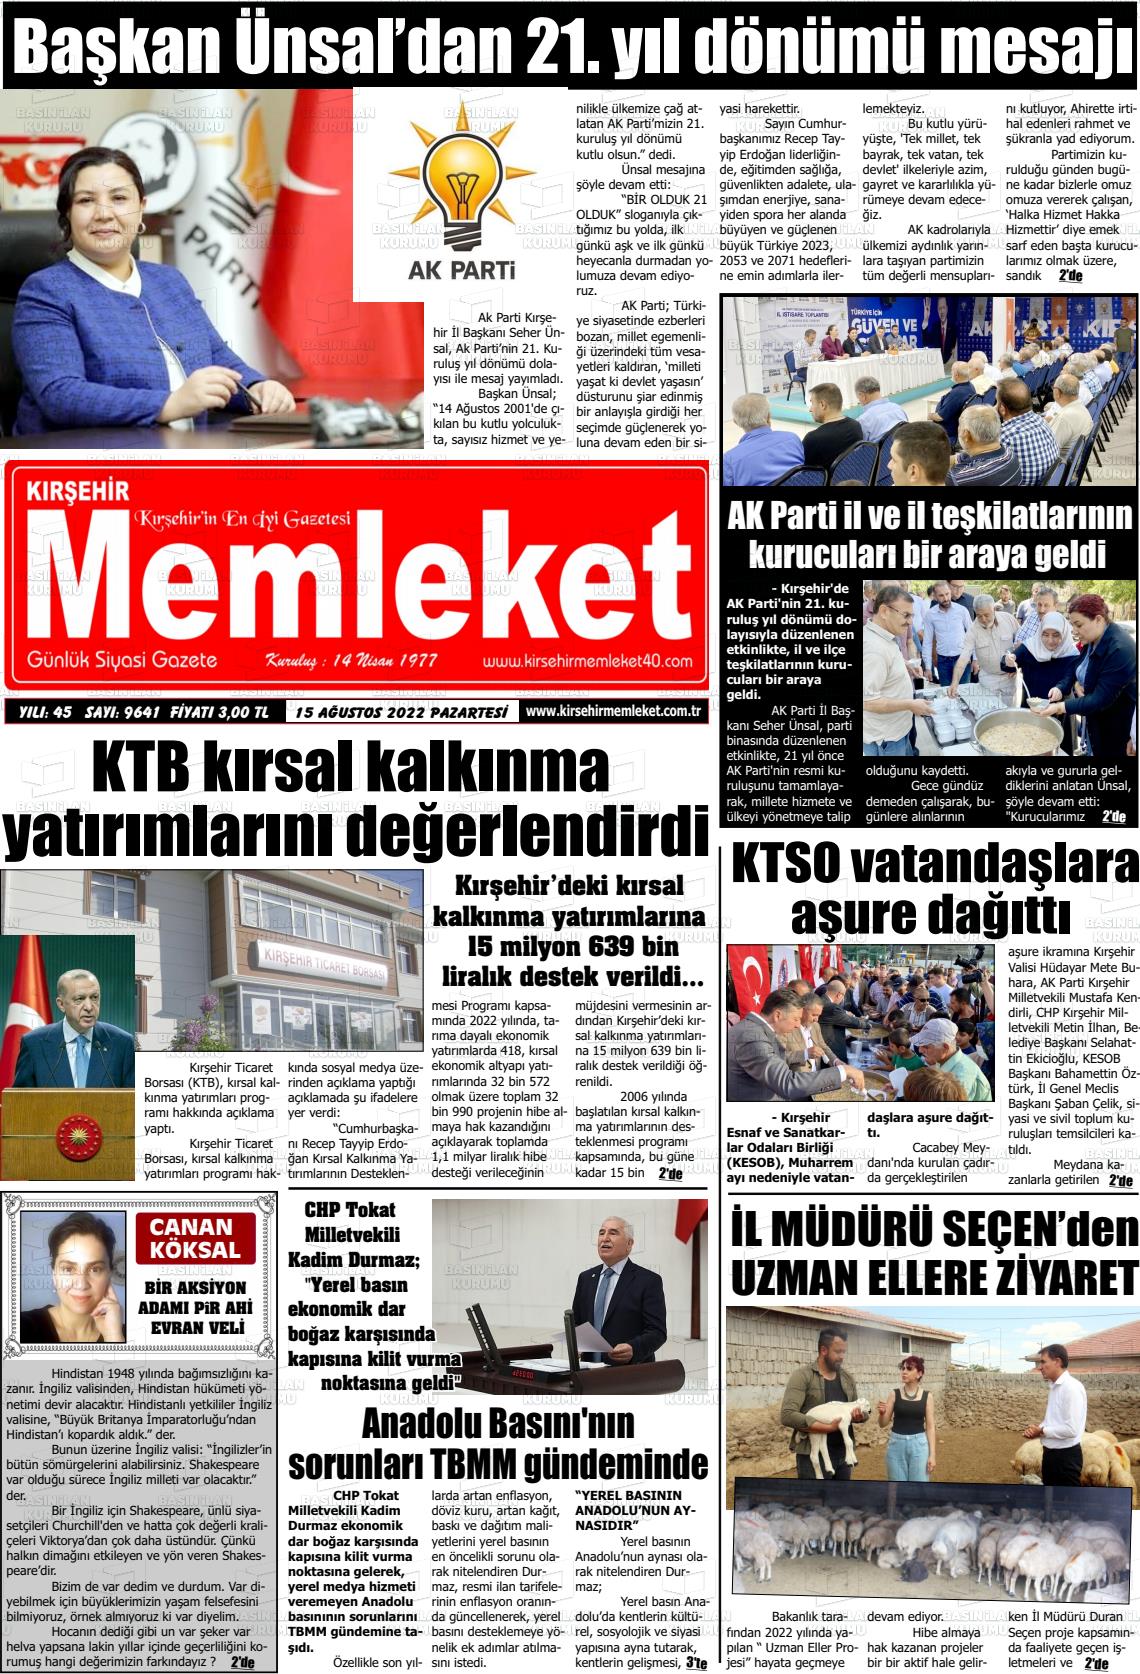 15 Ağustos 2022 Kırşehir Memleket Gazete Manşeti